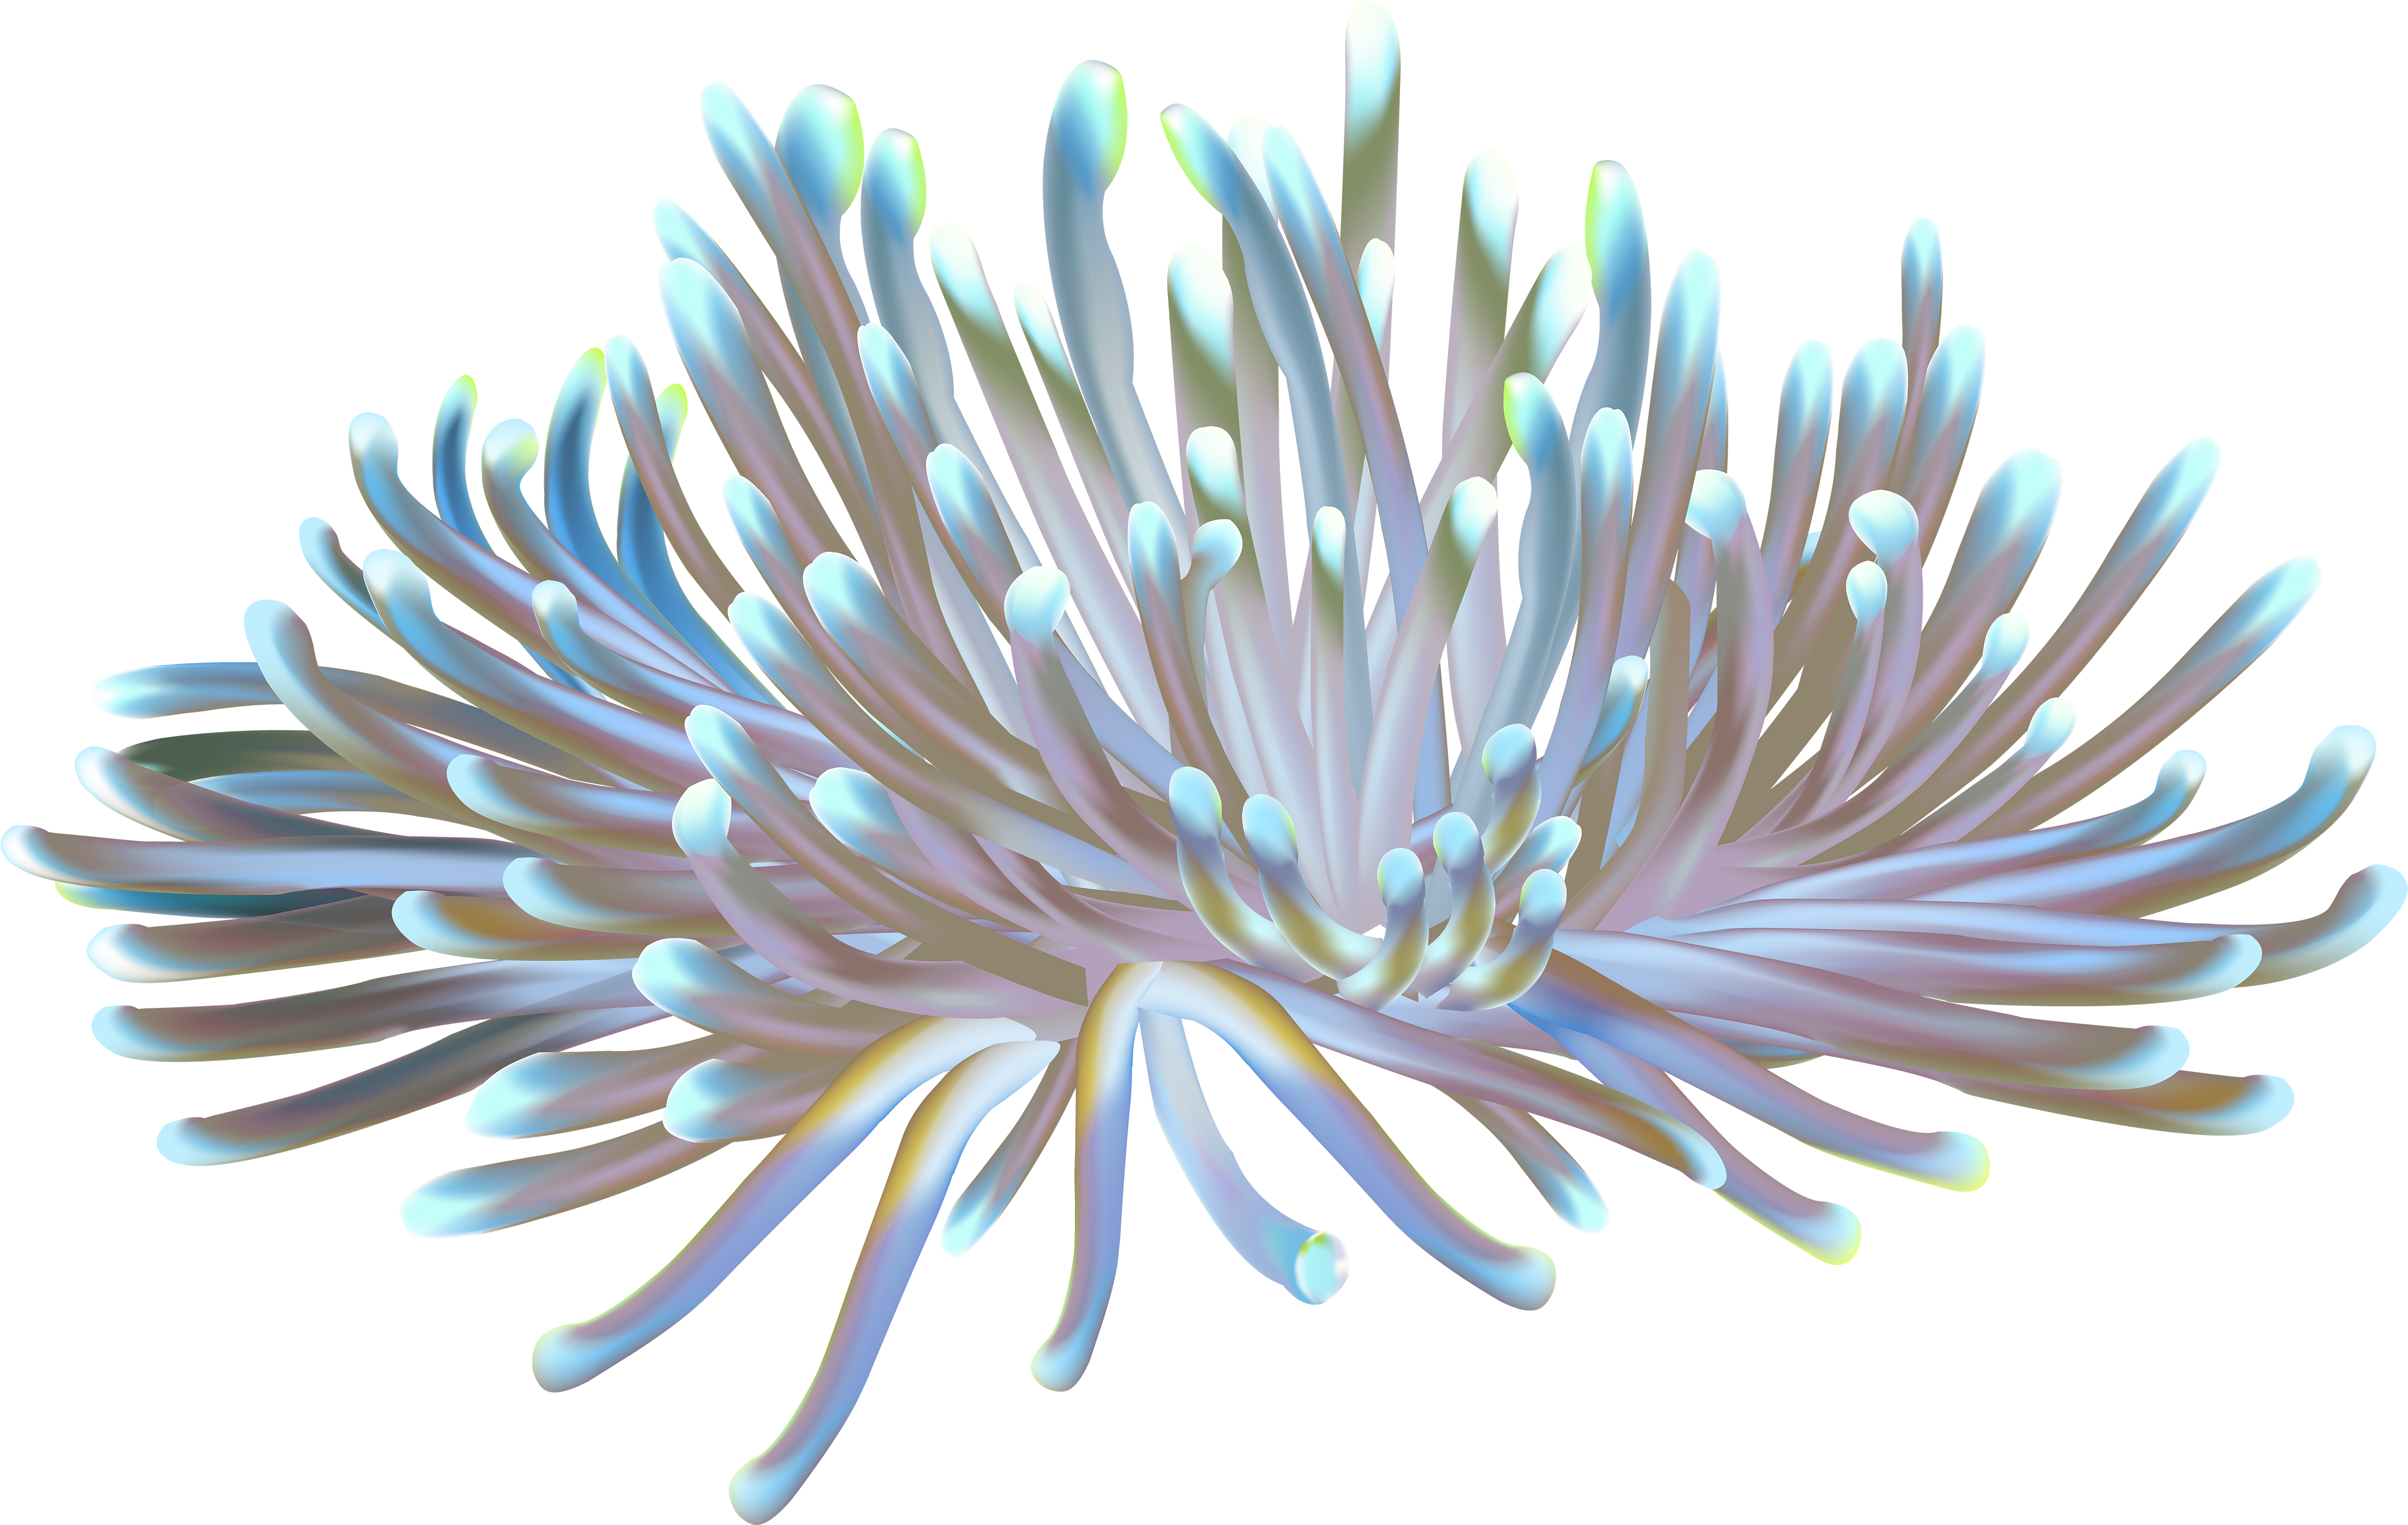 A Close Up Of A Sea Anemone